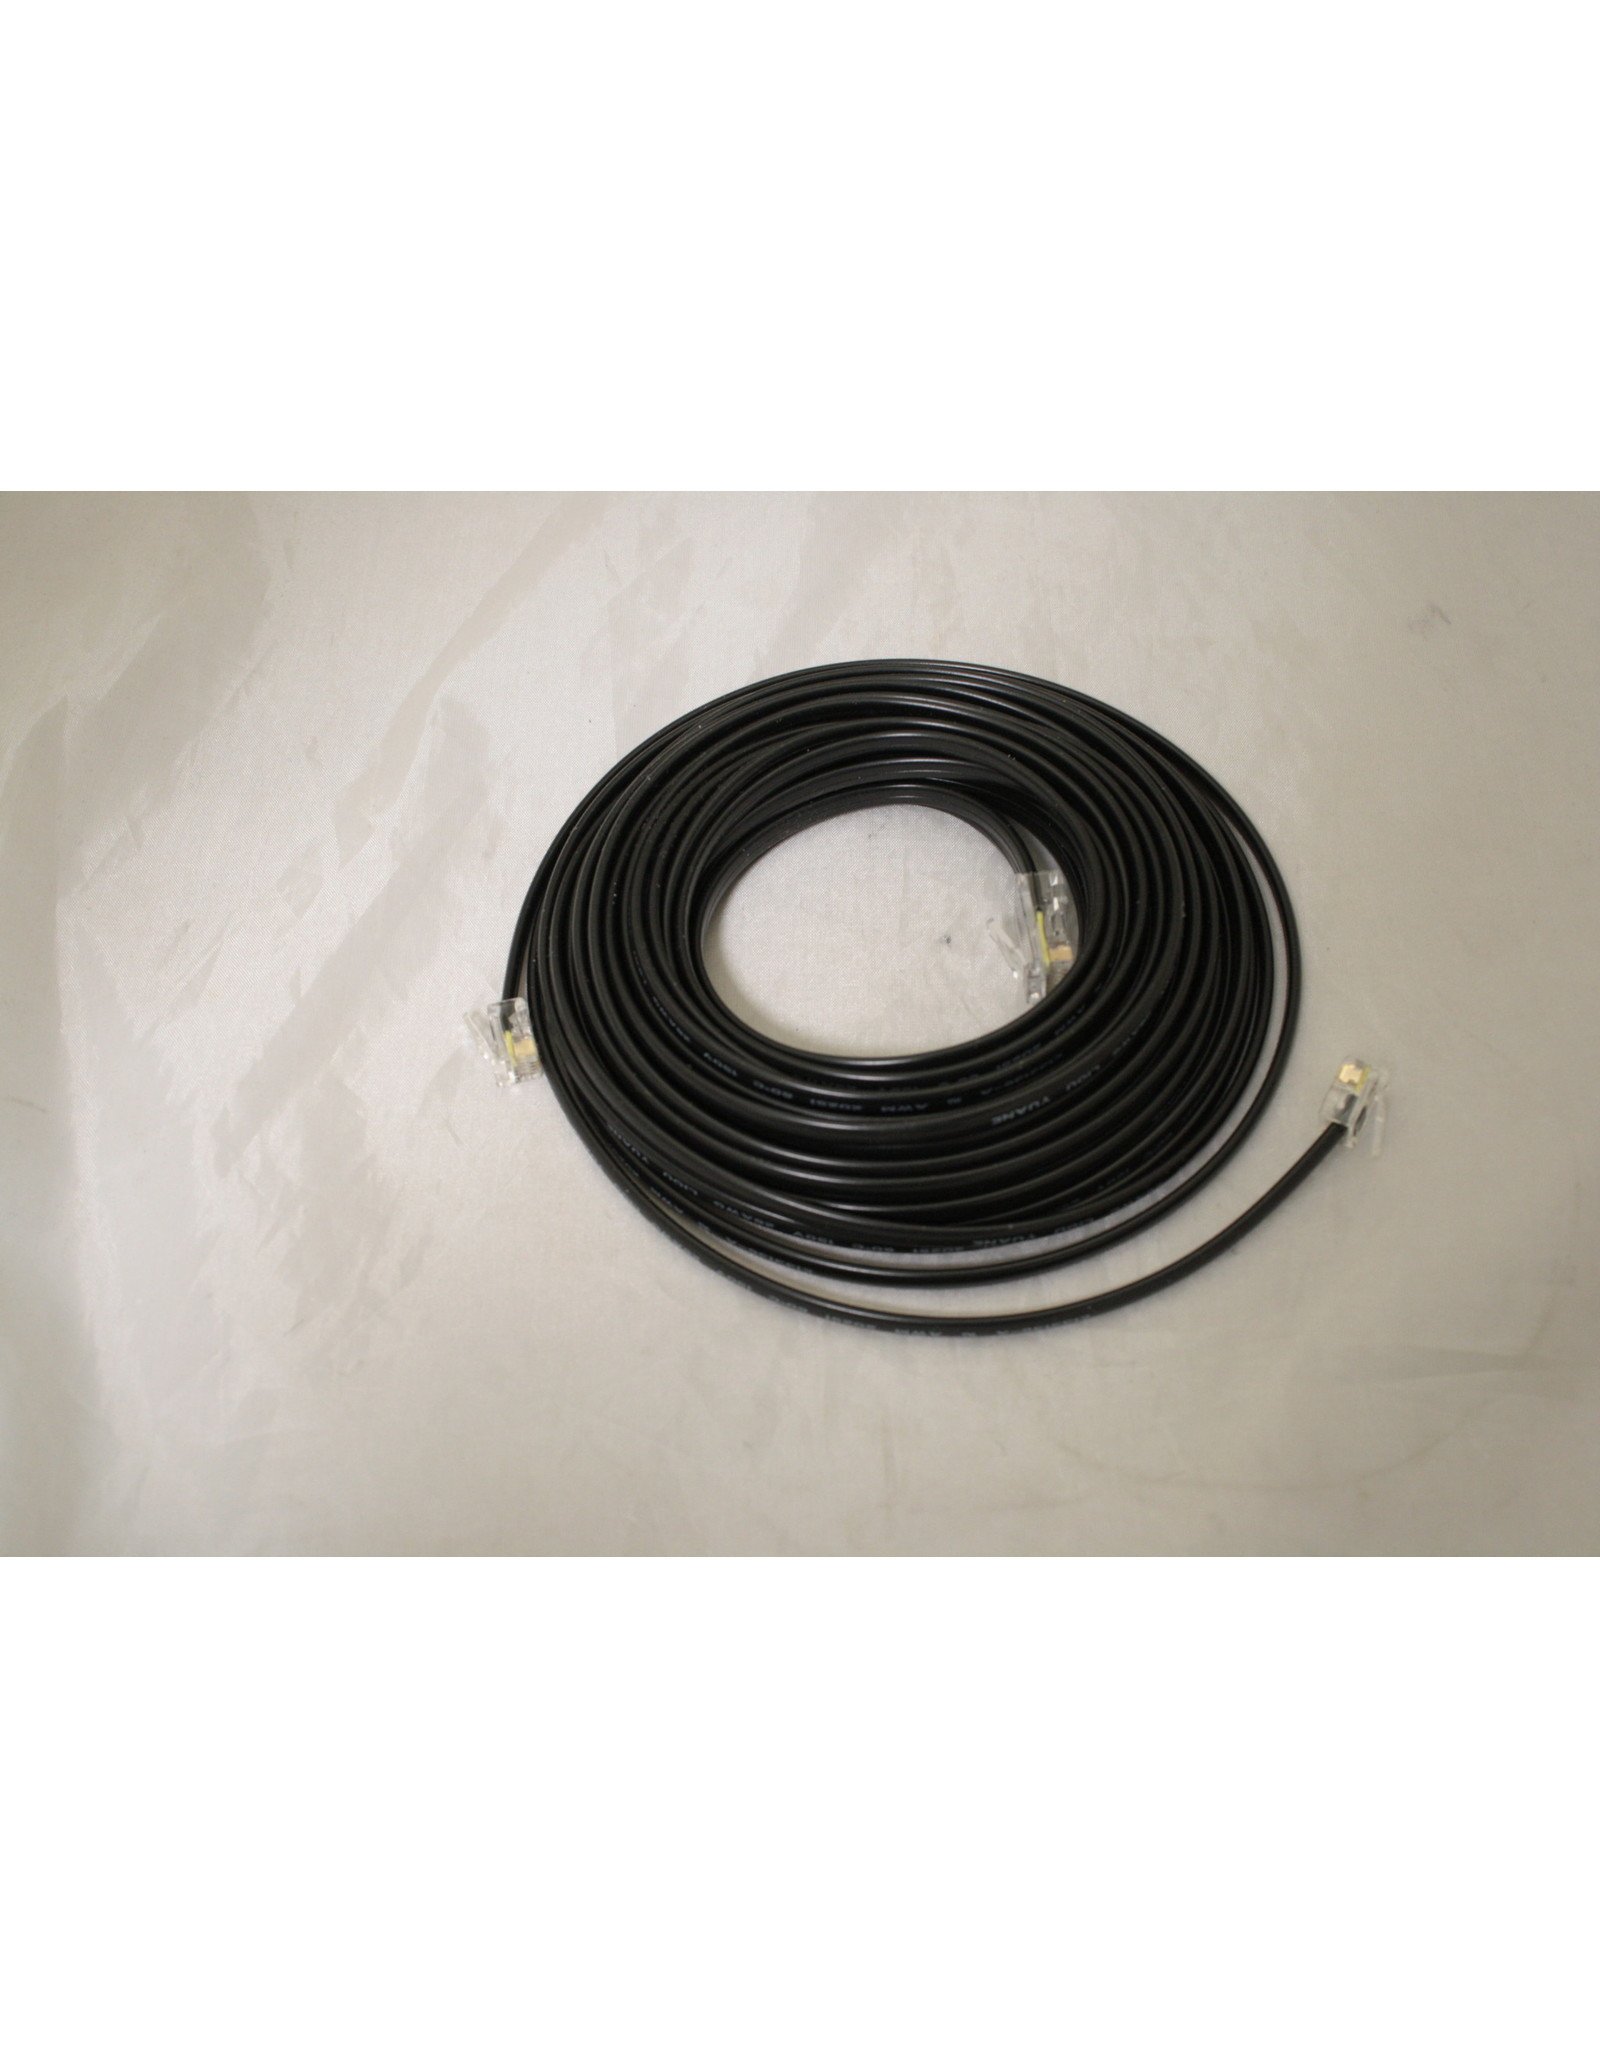 JMI JMI Encoder Cable (25 foot length)